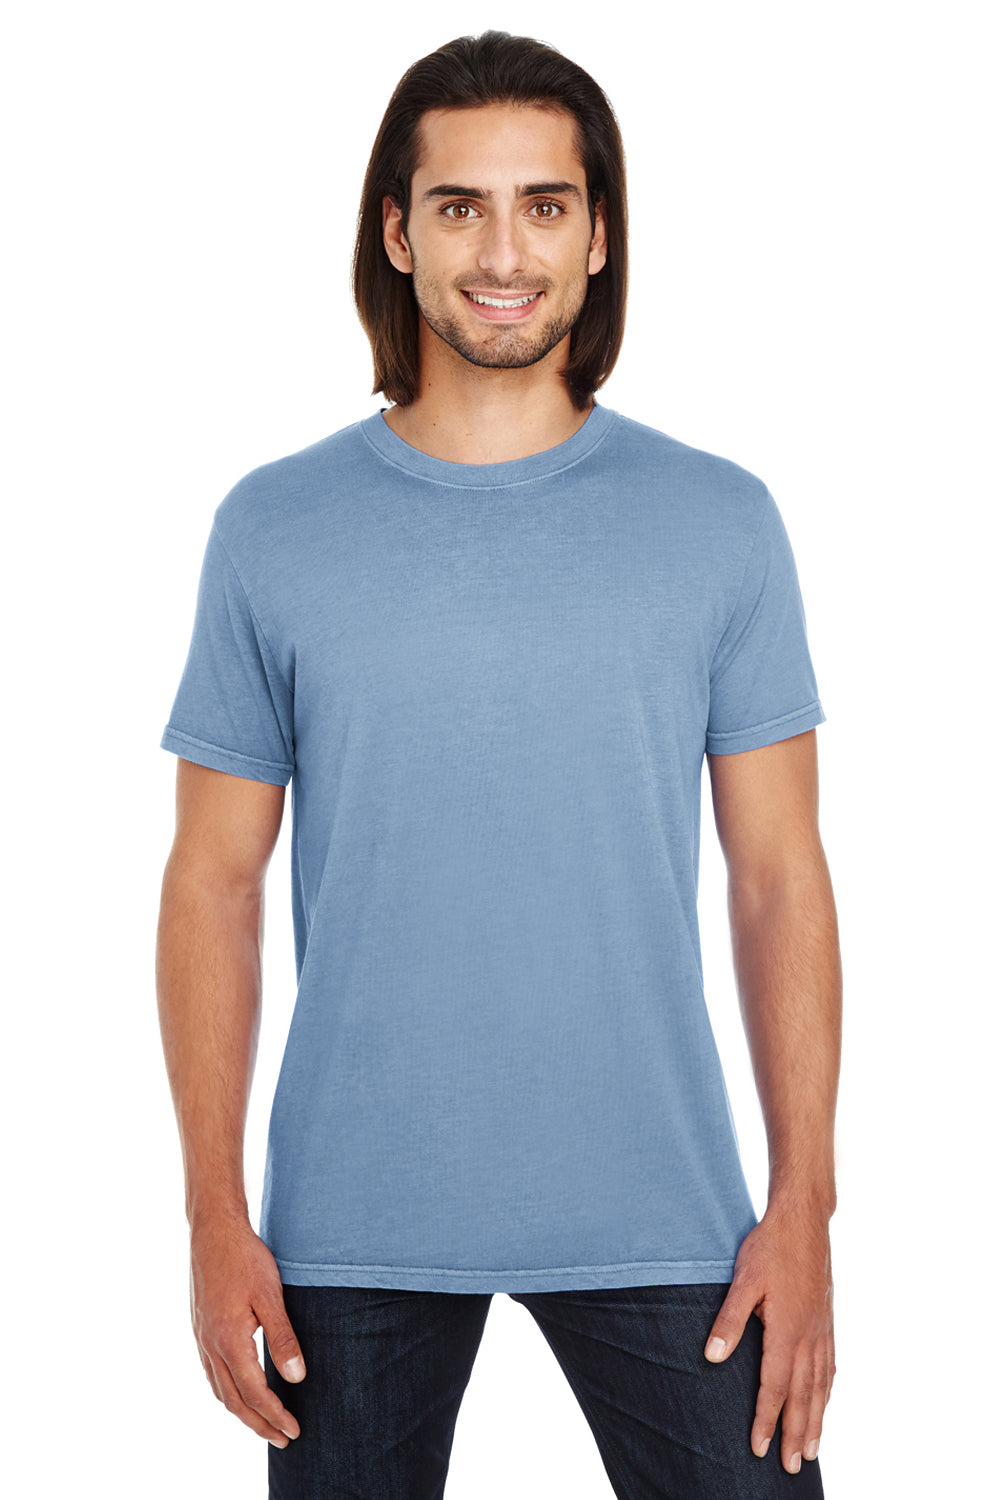 Threadfast Apparel 130A Mens Short Sleeve Crewneck T-Shirt Denim Blue Front